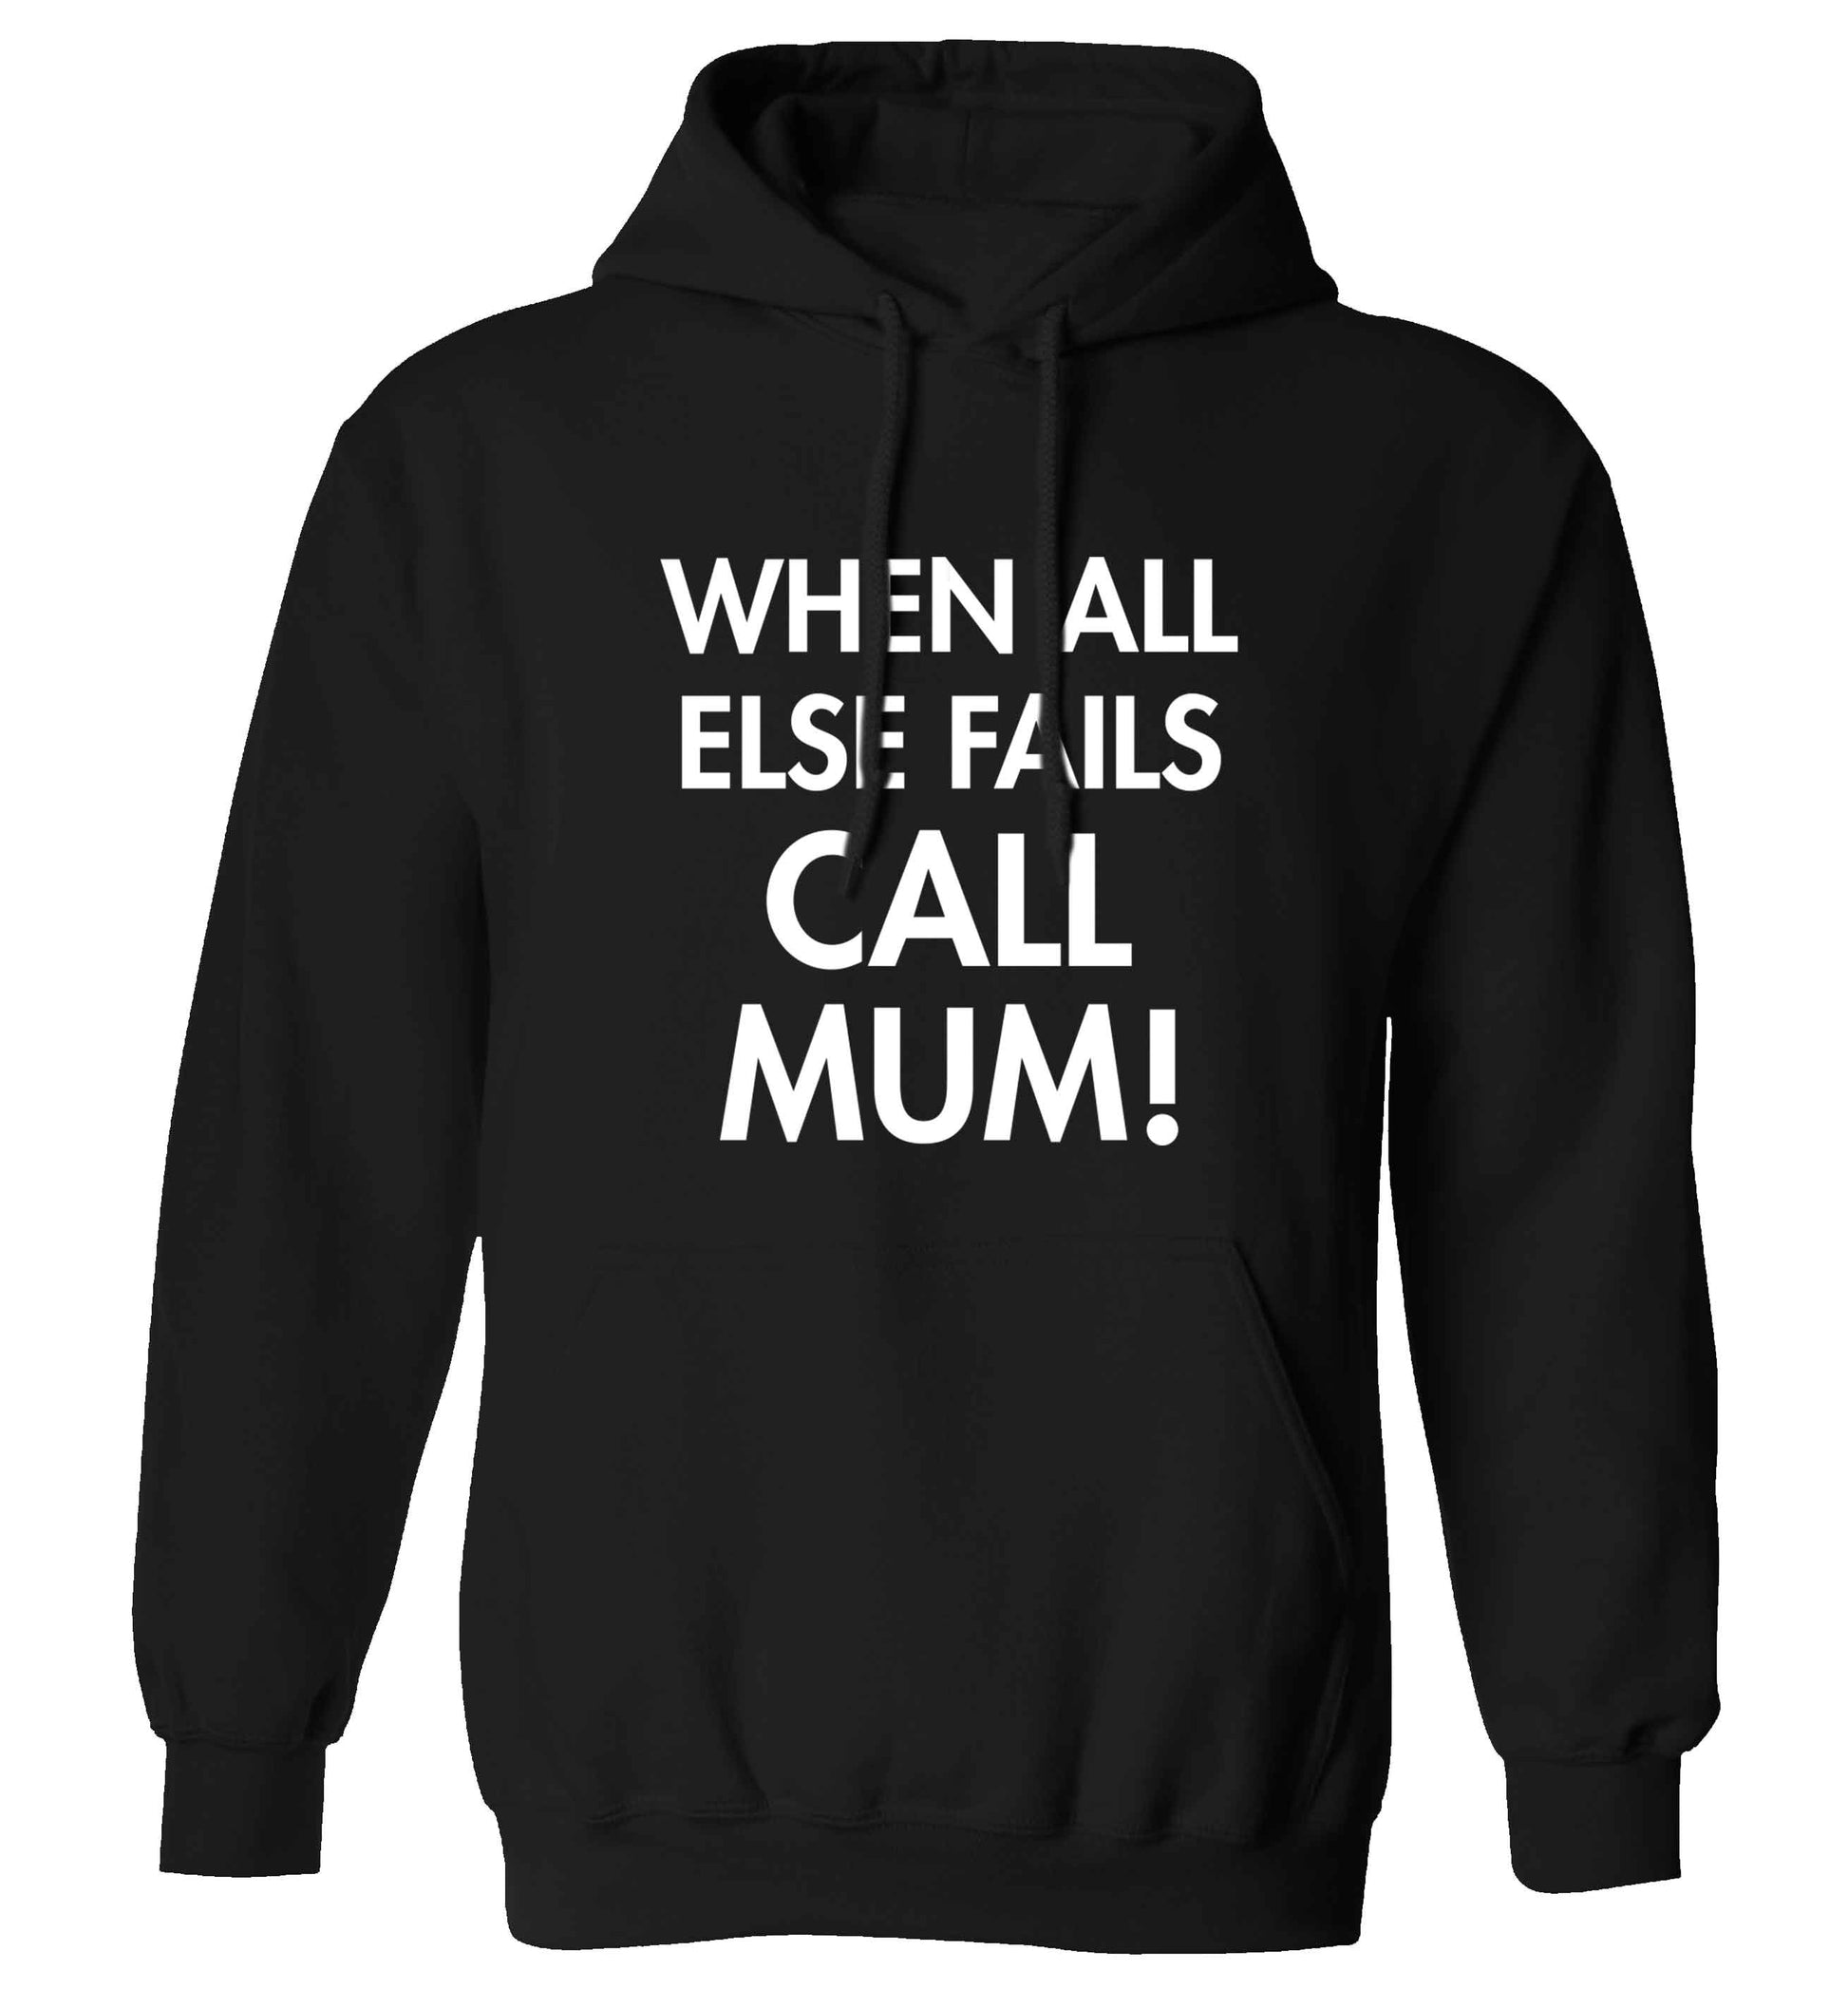 When all else fails call mum! adults unisex black hoodie 2XL